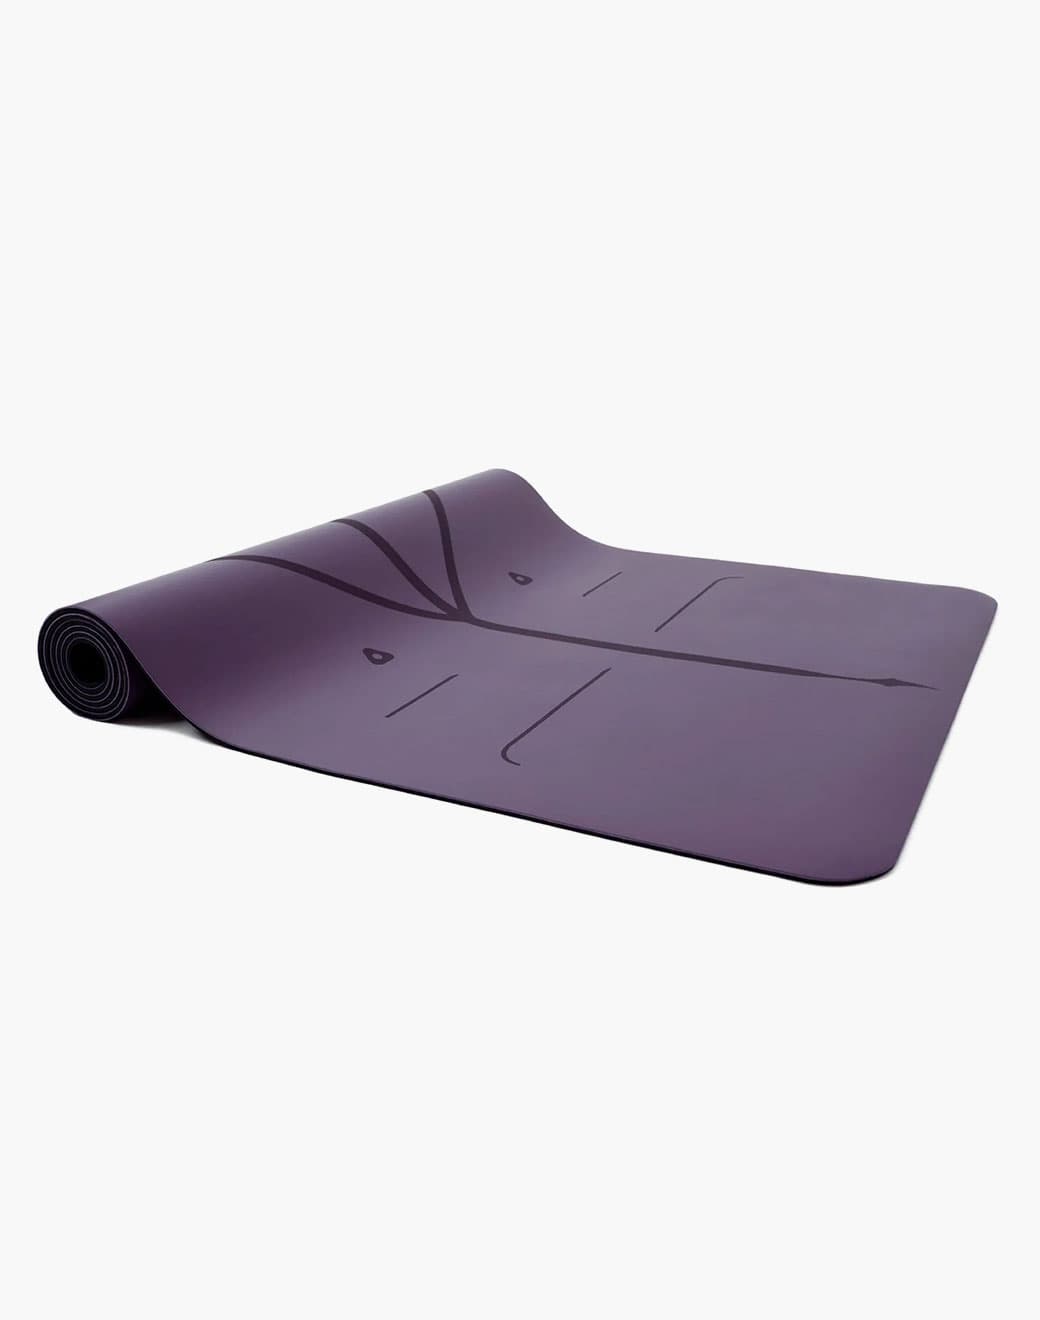 Liforme Purple Earth 4.2mm Yoga Matı 4